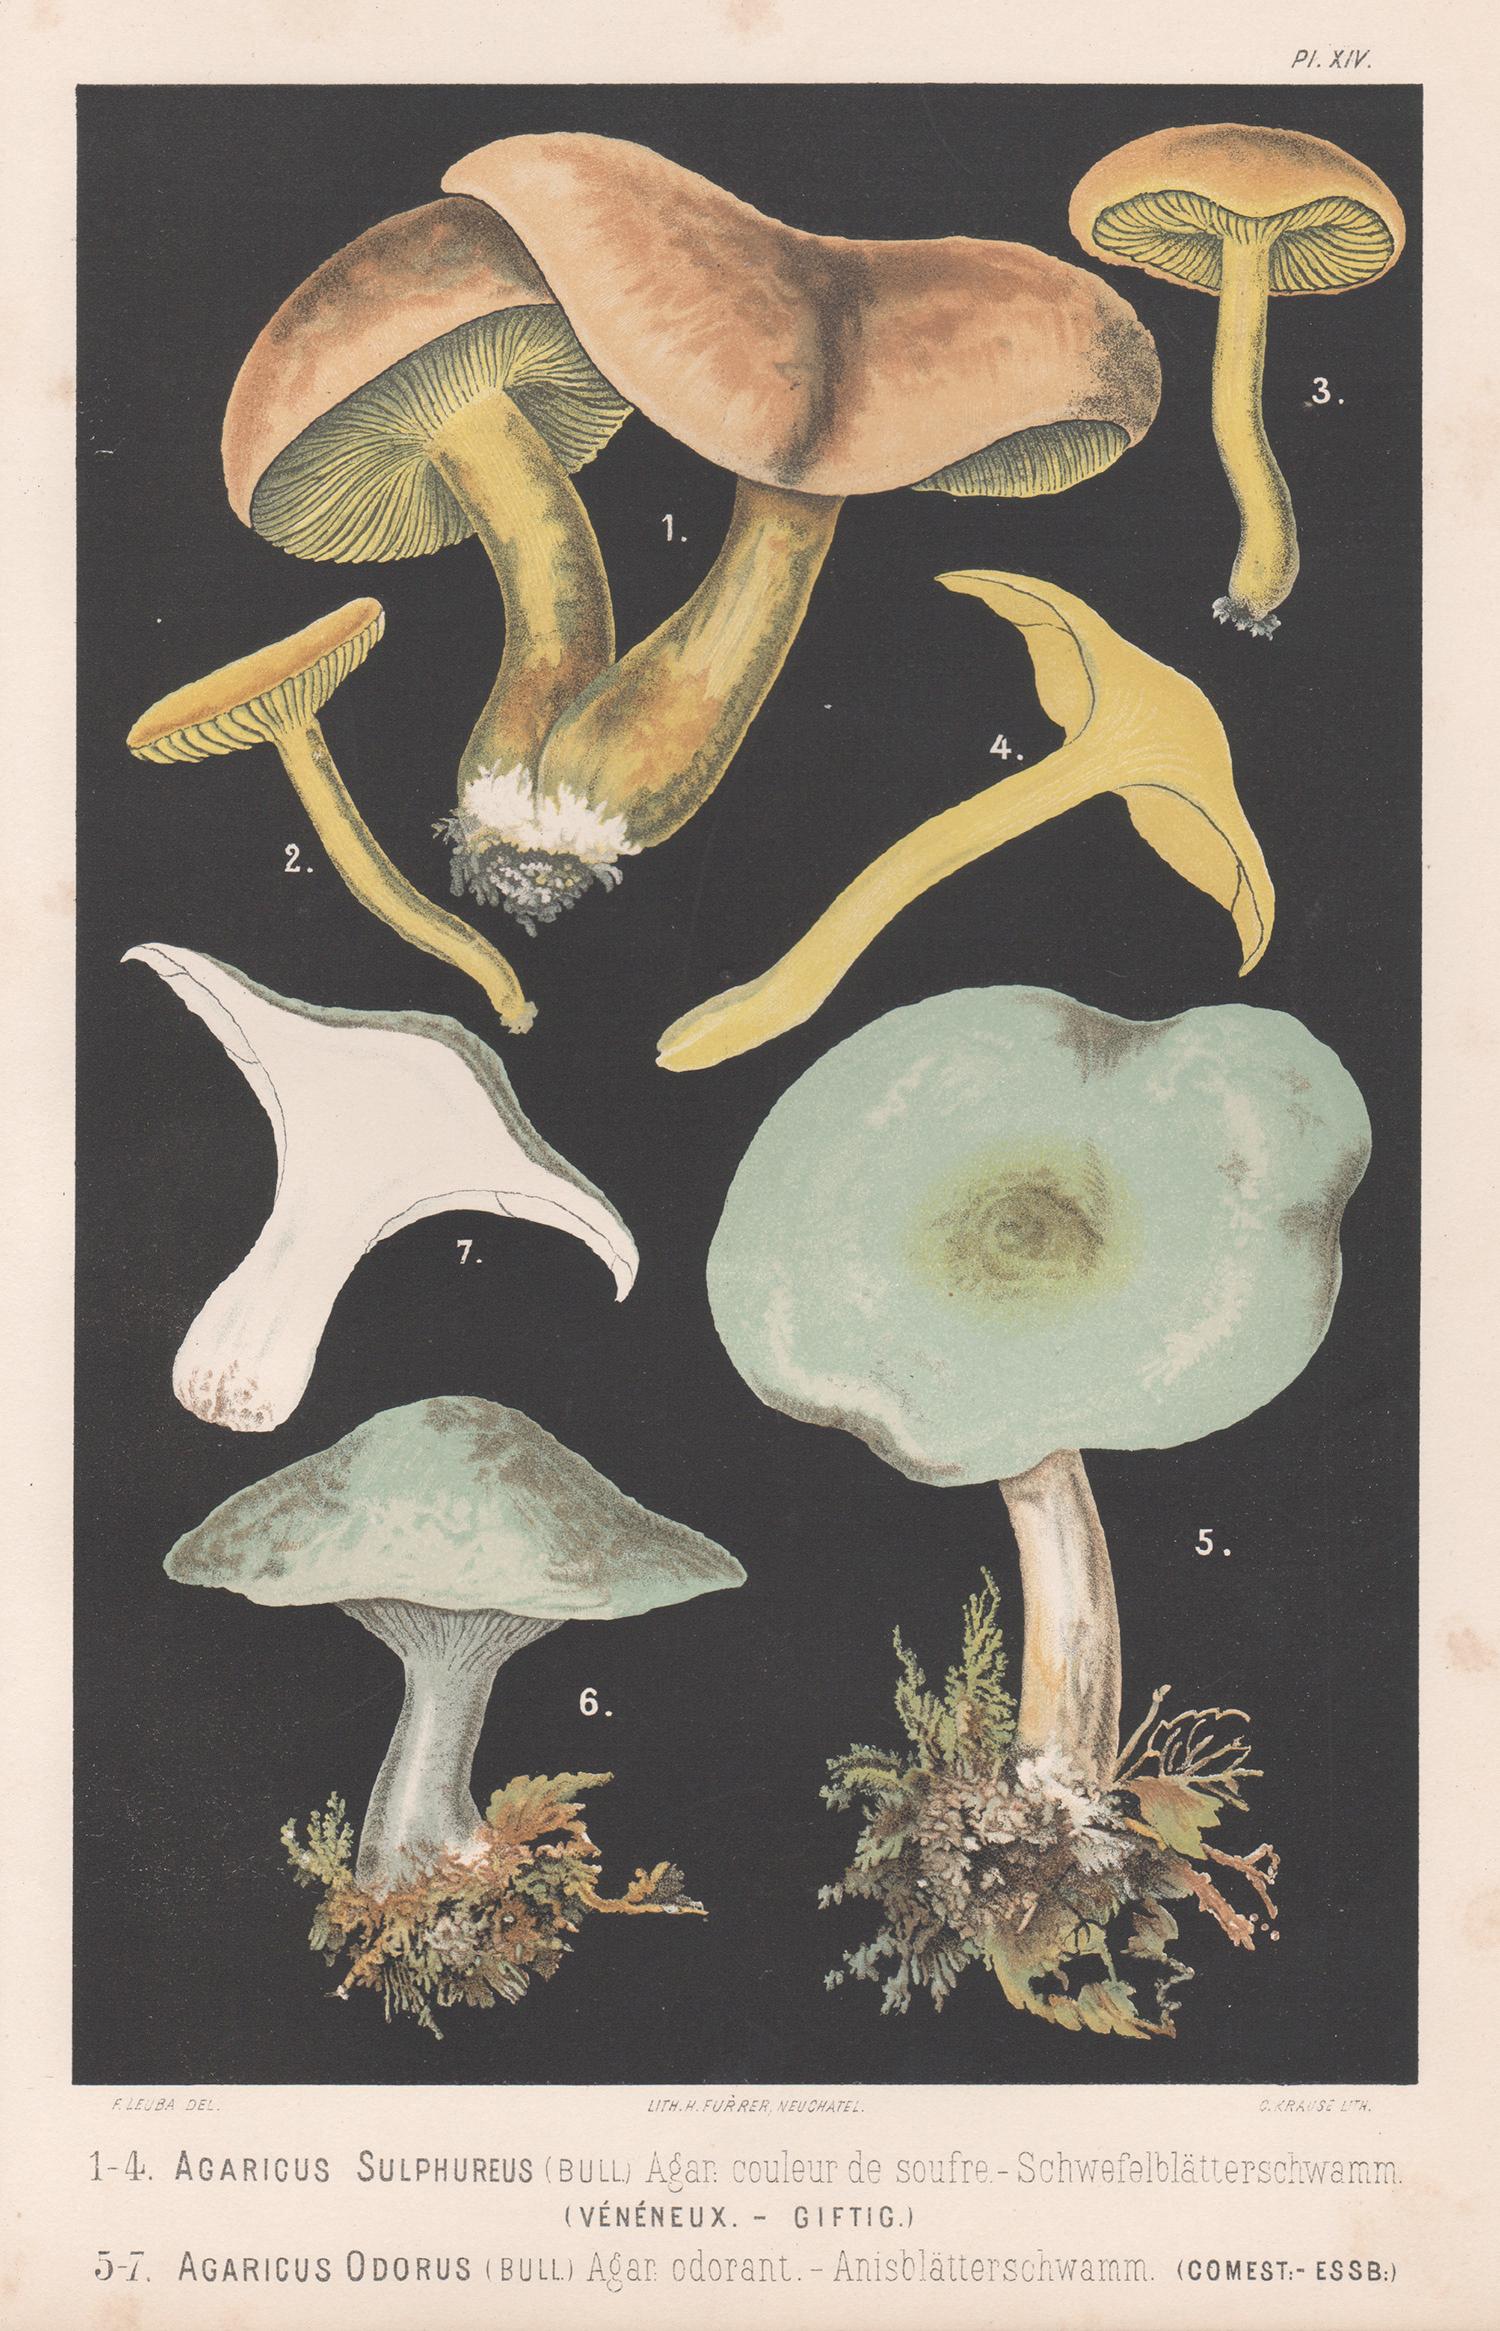 H Furrer after Fritz Leuba Still-Life Print - Agaricus Sulphureus, Fritz Leuba antique mushroom fungi chromolithograph, 1890